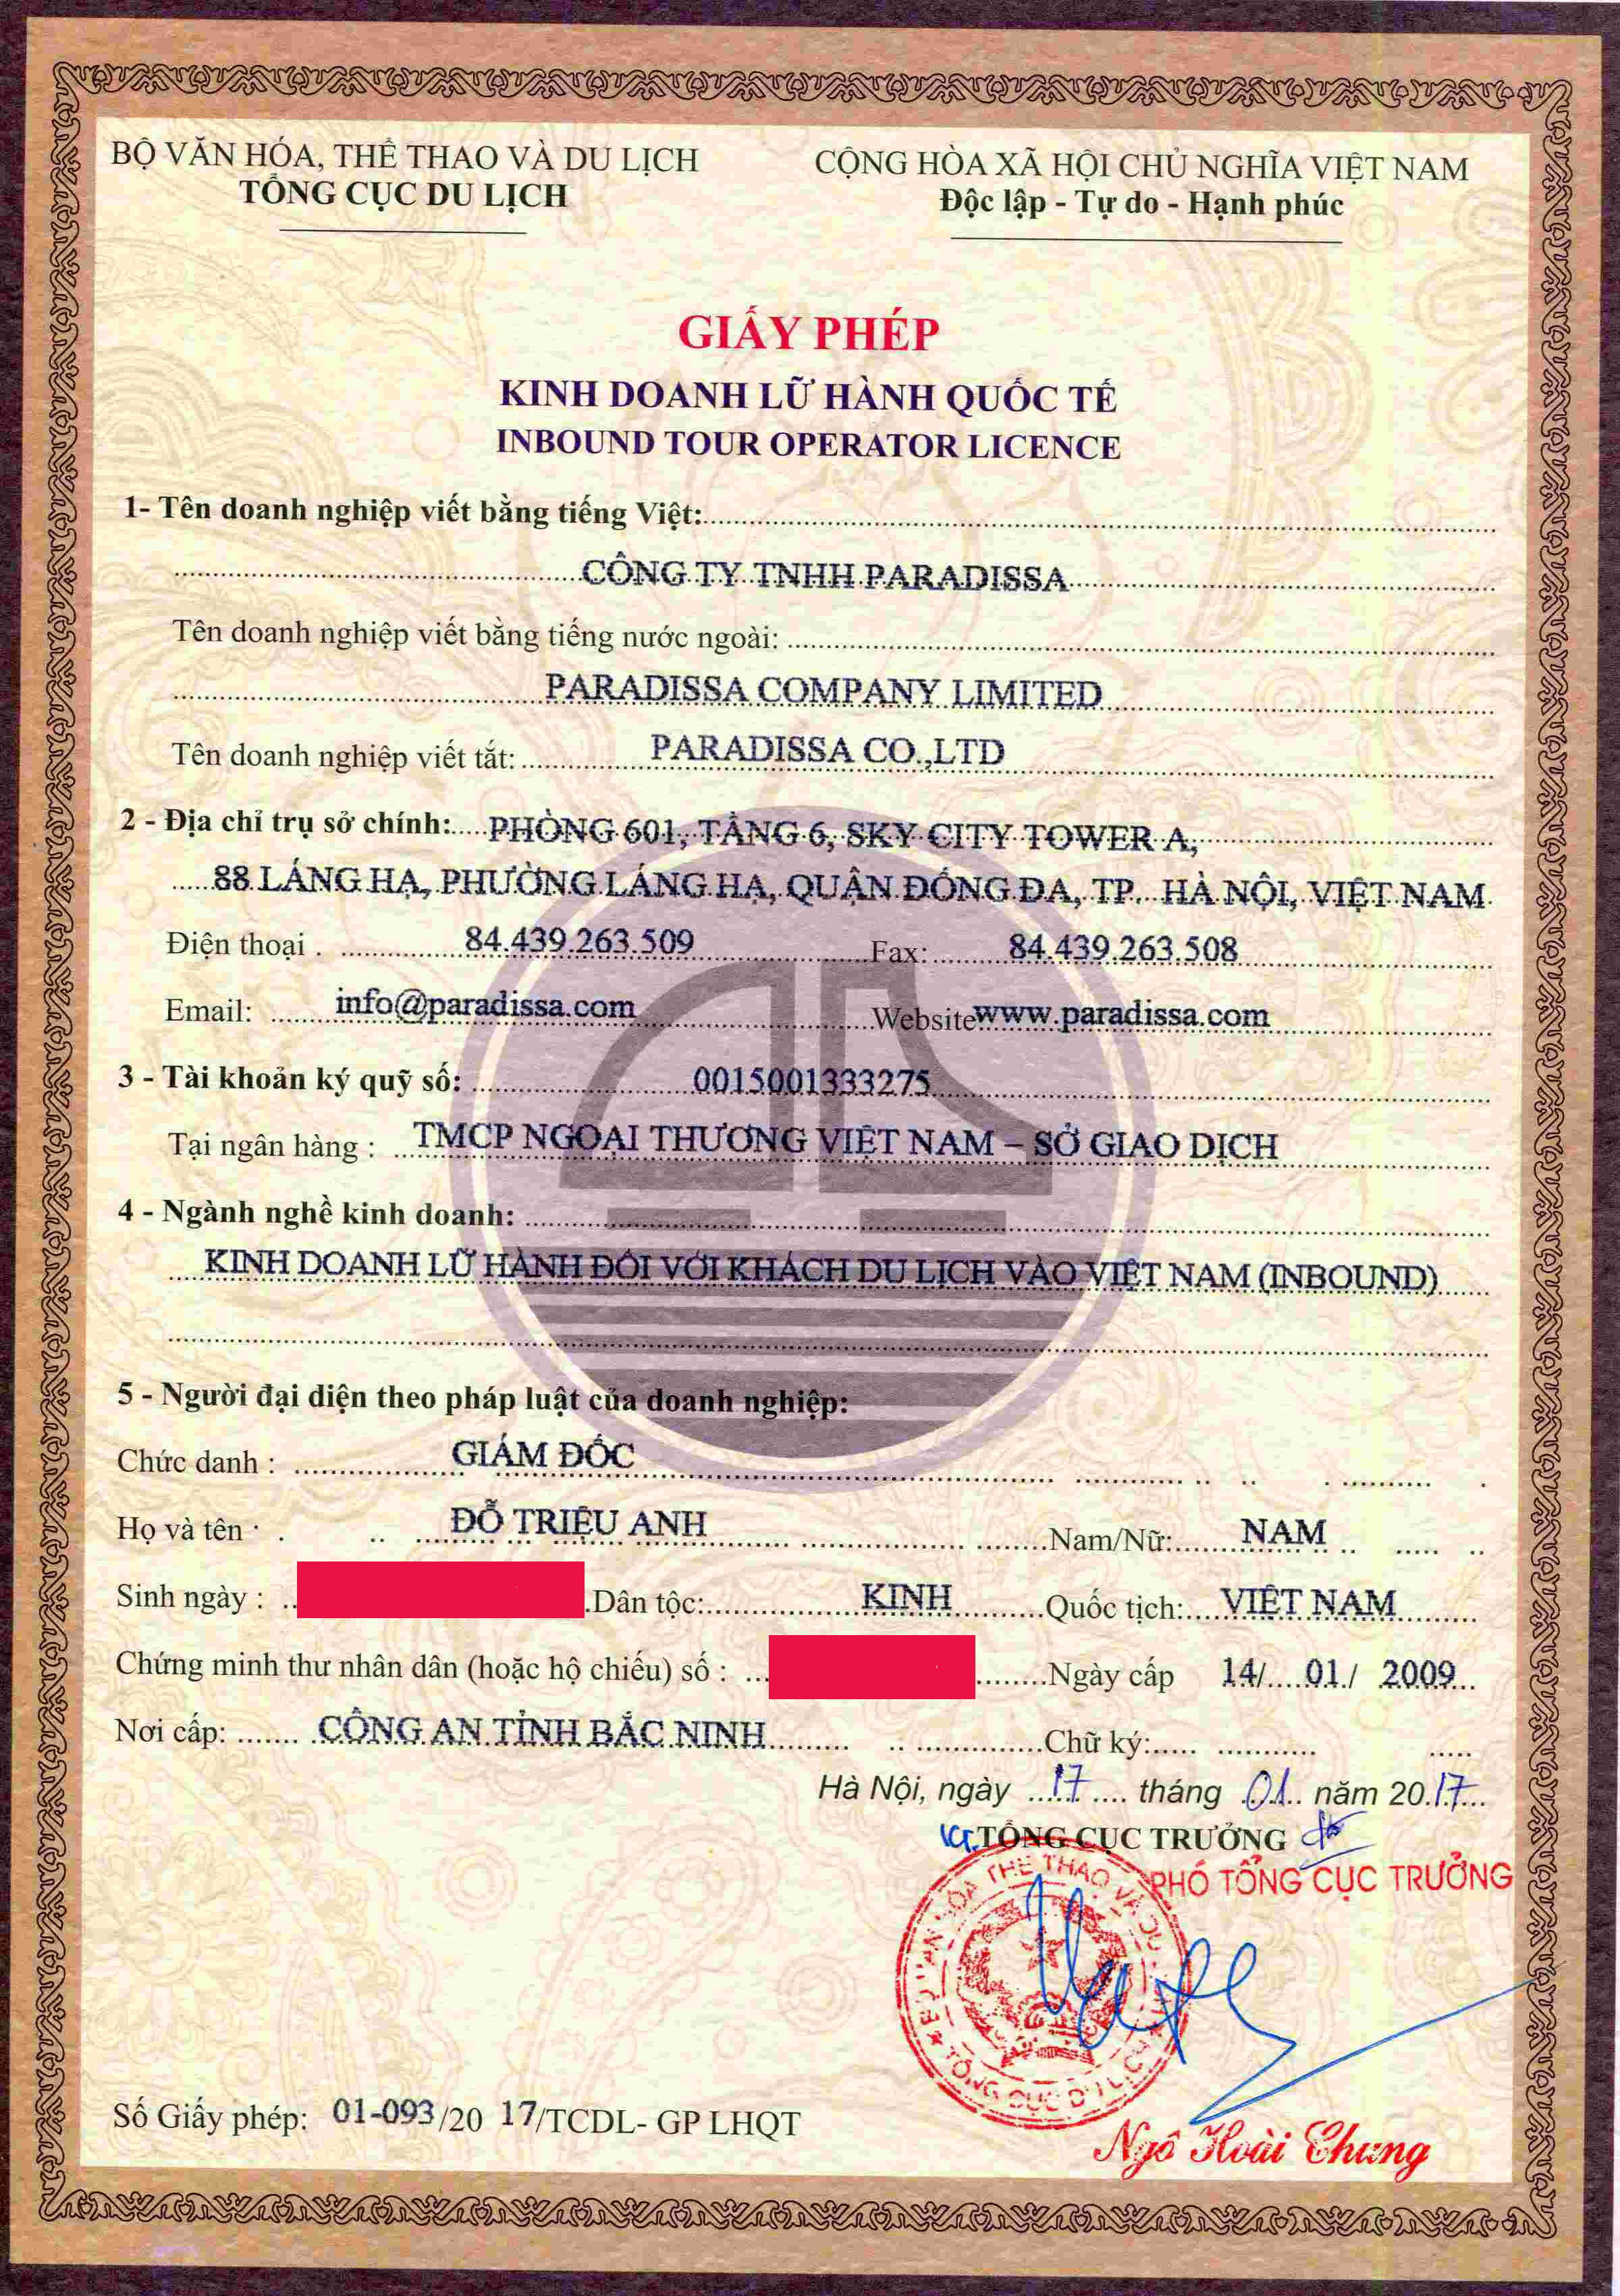 Paradissa's Vietnam Tour Operator License